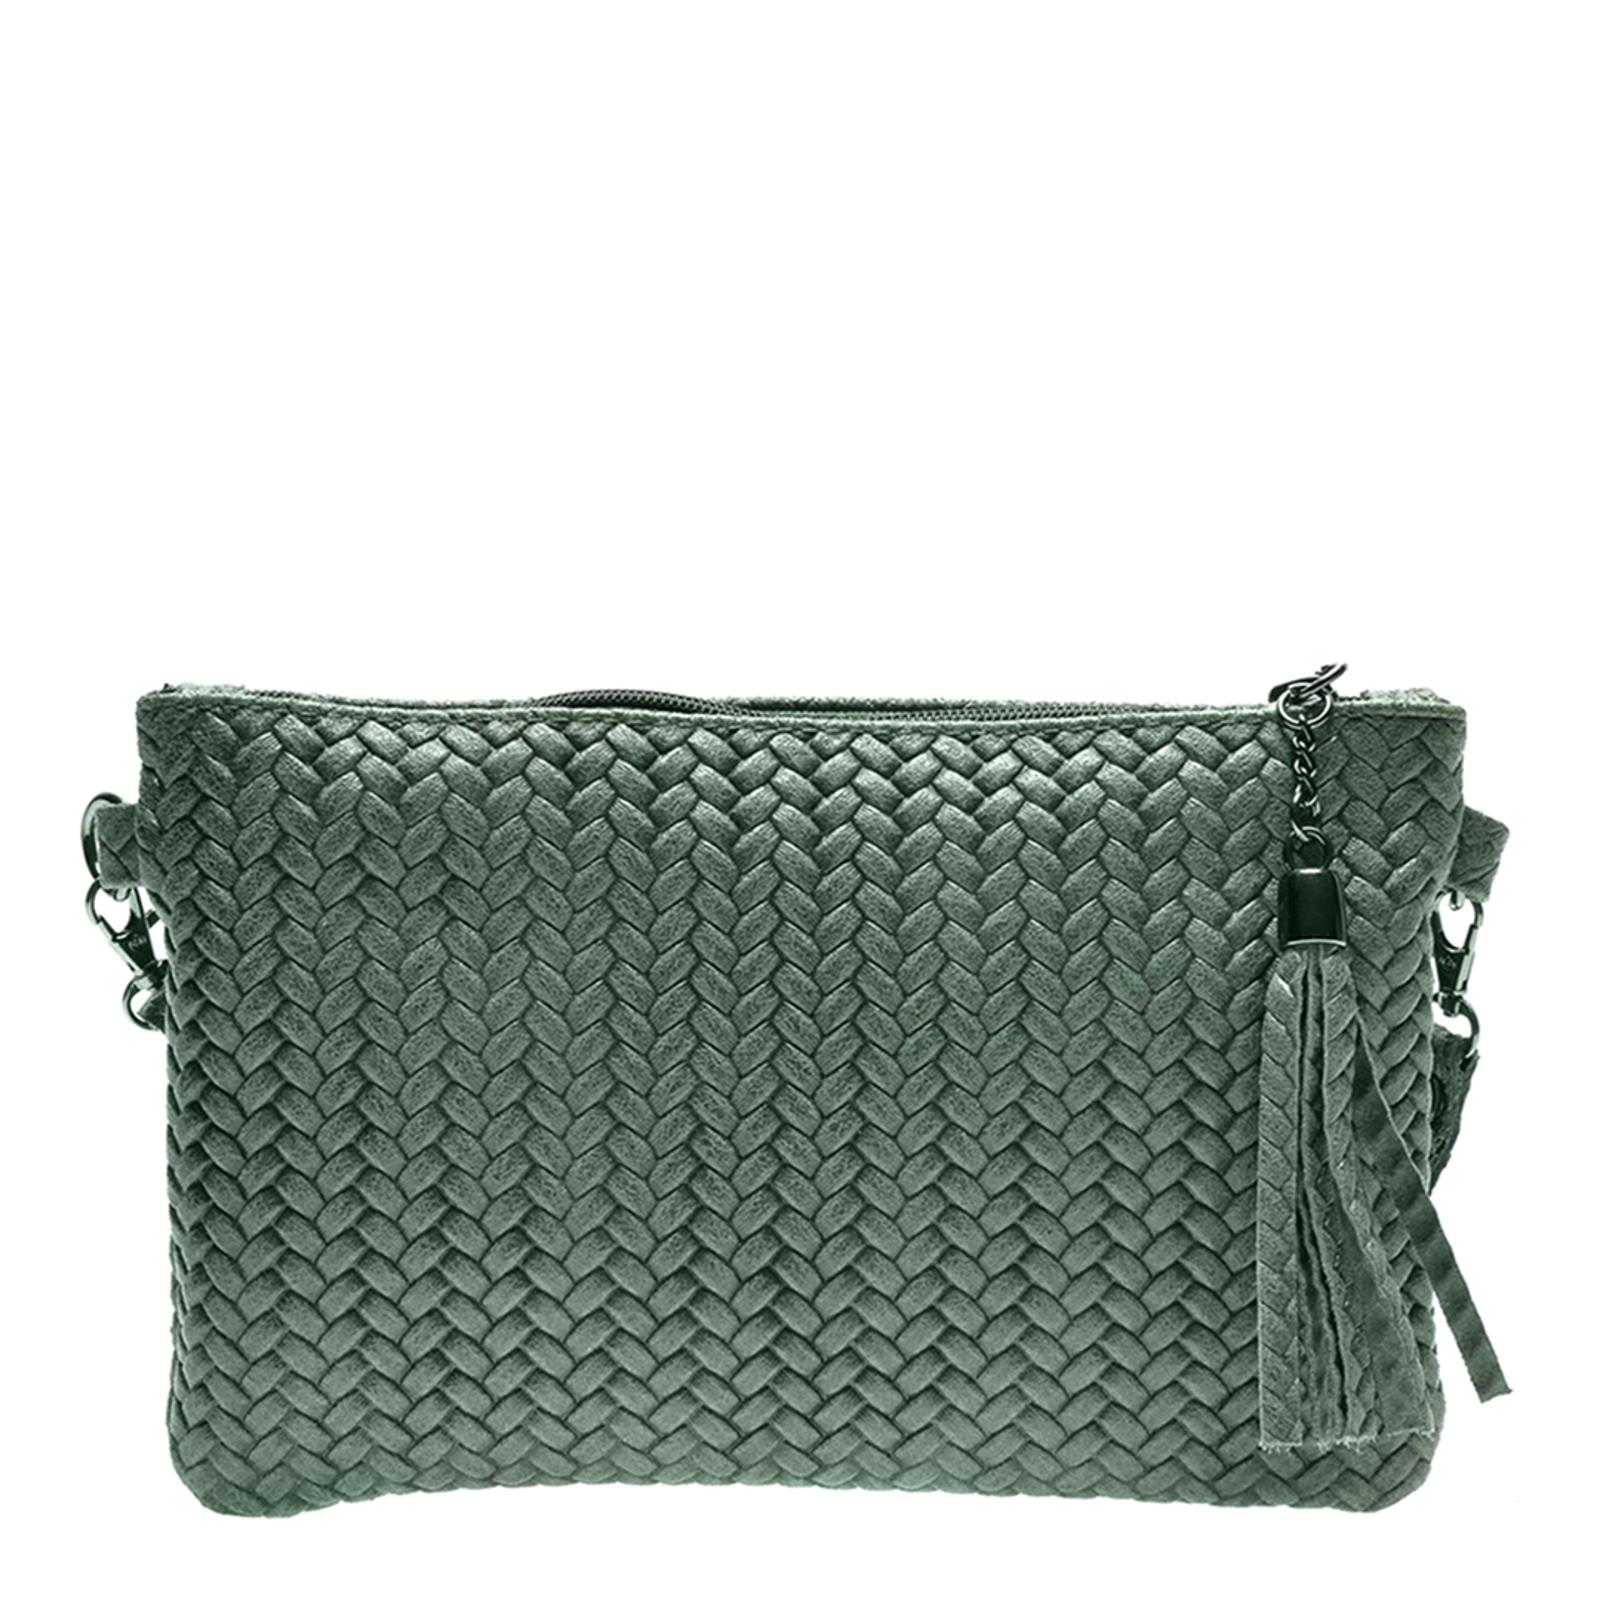 Green Leather Top Zip Closure Shoulder Bag - BrandAlley